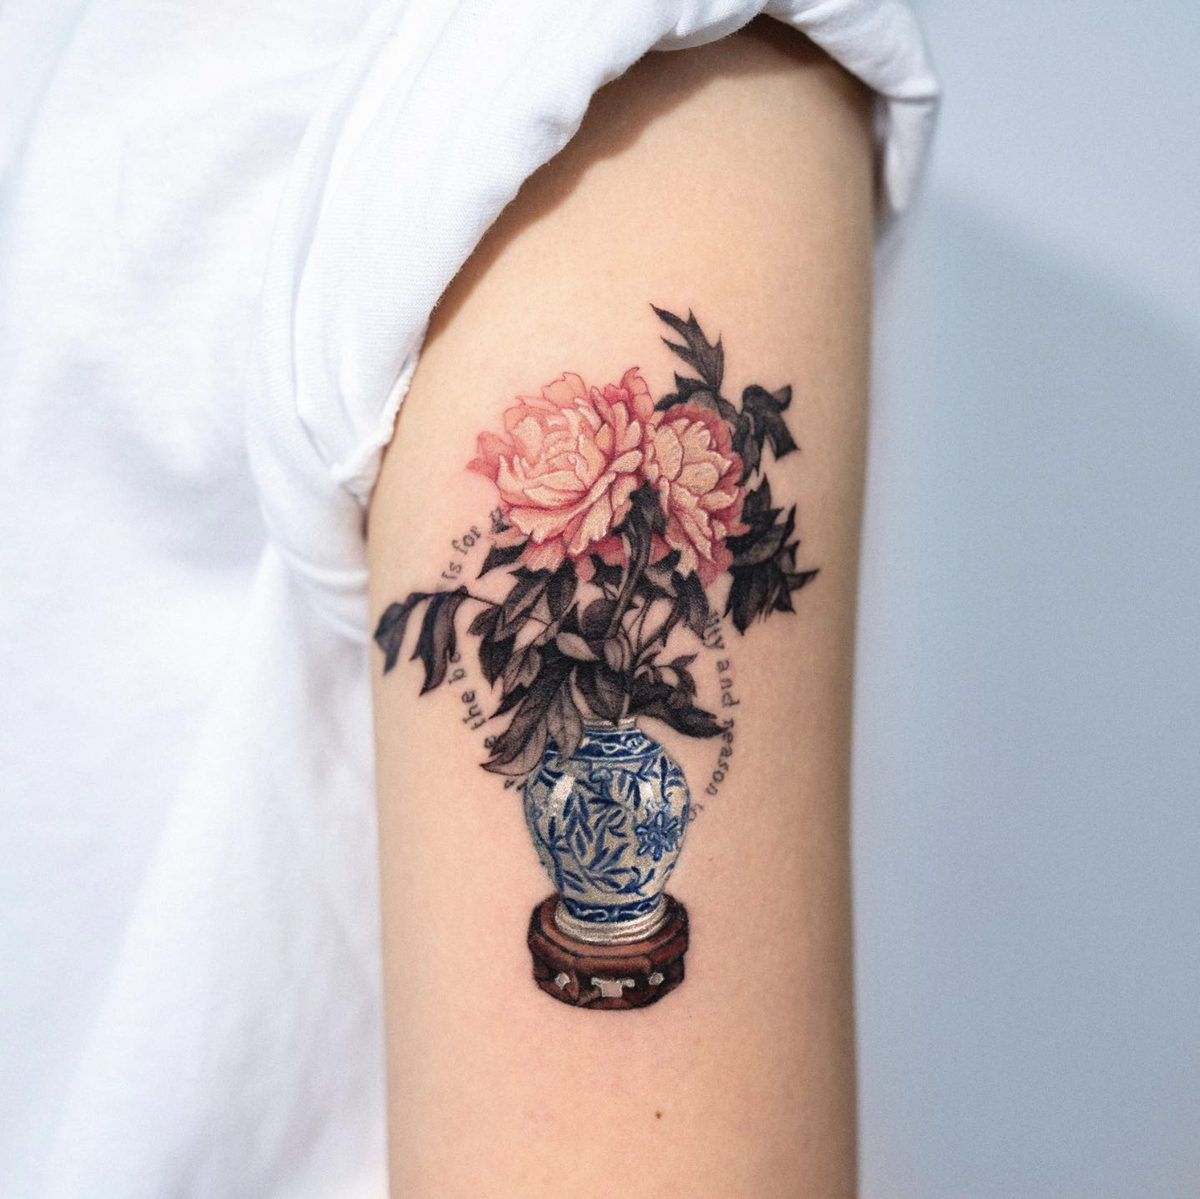 New Tattoo 2 by Anararion on DeviantArt